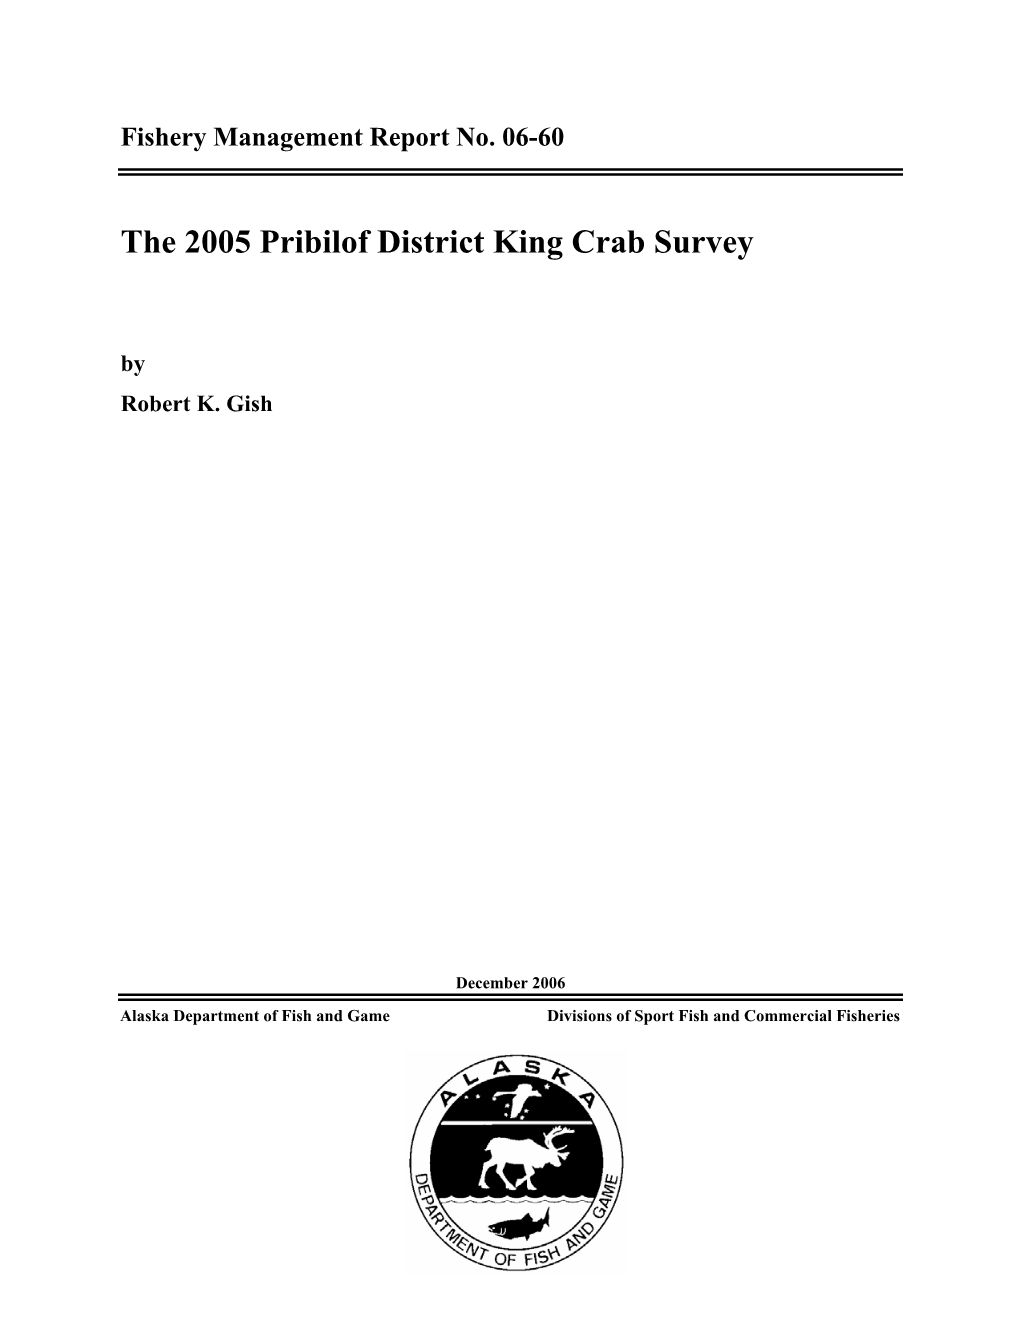 The 2005 Pribilof District King Crab Survey